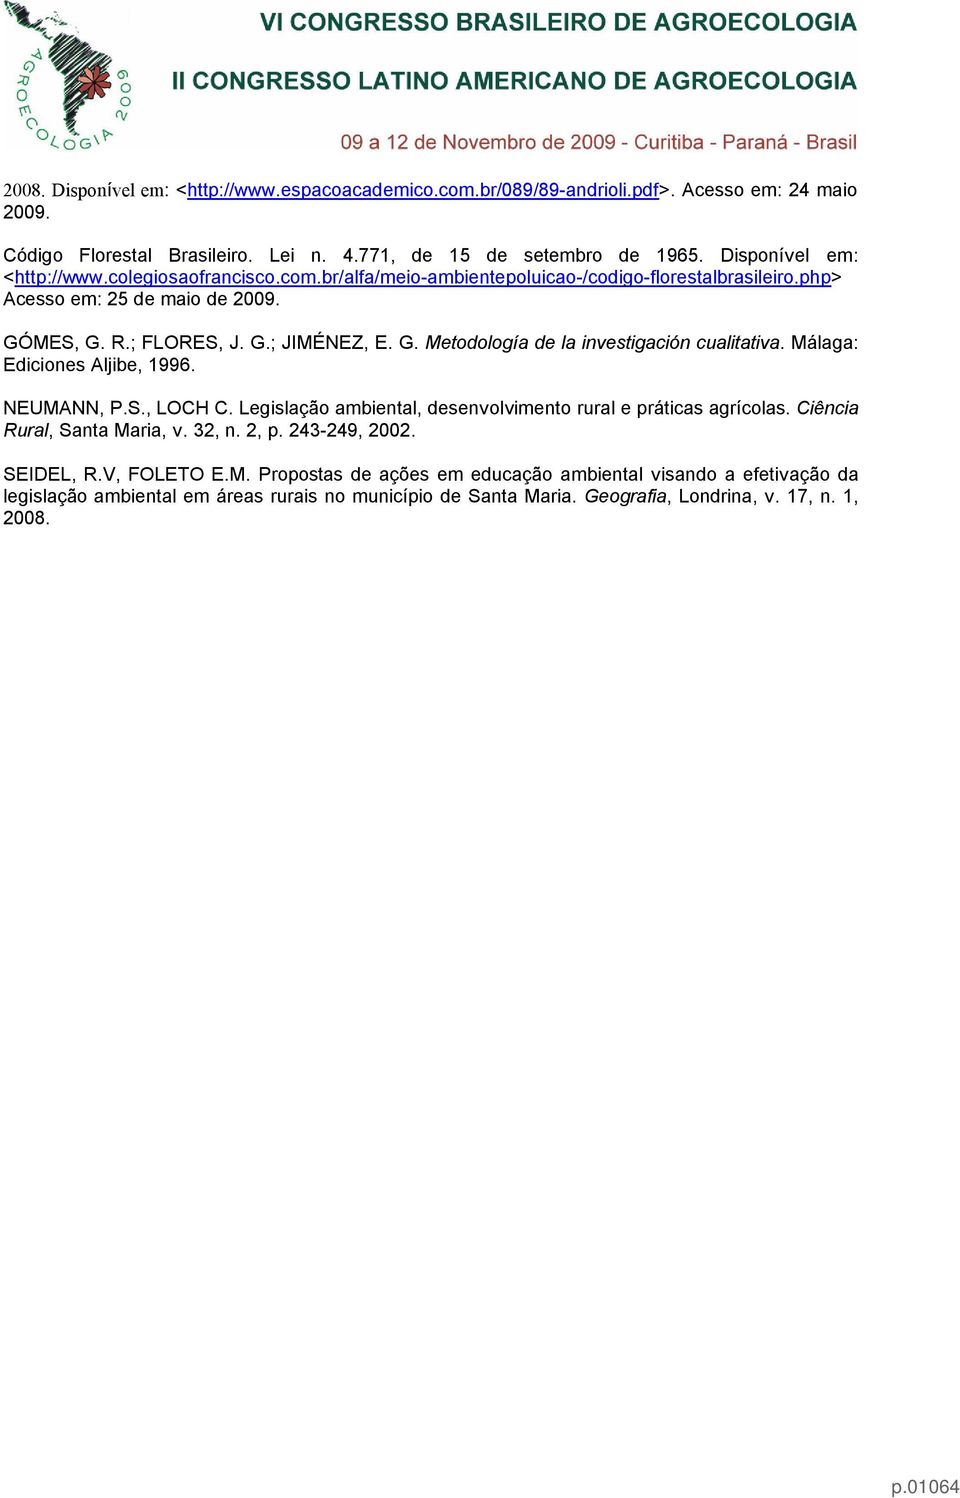 Málaga: Ediciones Aljibe, 1996. NEUMANN, P.S., LOCH C. Legislação ambiental, desenvolvimento rural e práticas agrícolas. Ciência Rural, Santa Maria, v. 32, n. 2, p. 243-249, 2002. SEIDEL, R.